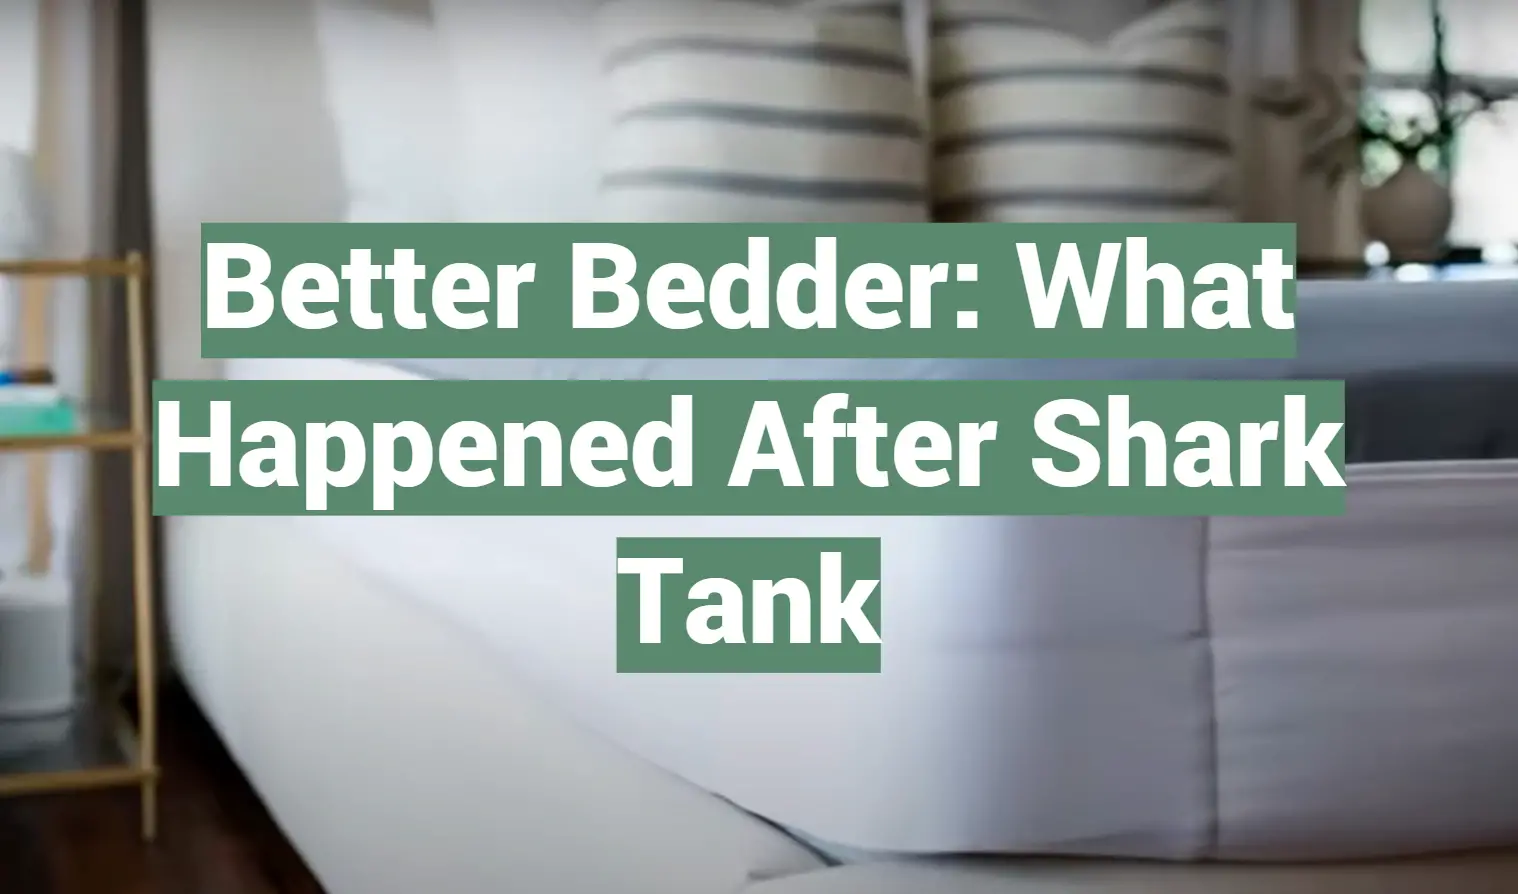 Better Bedder: What Happened After Shark Tank